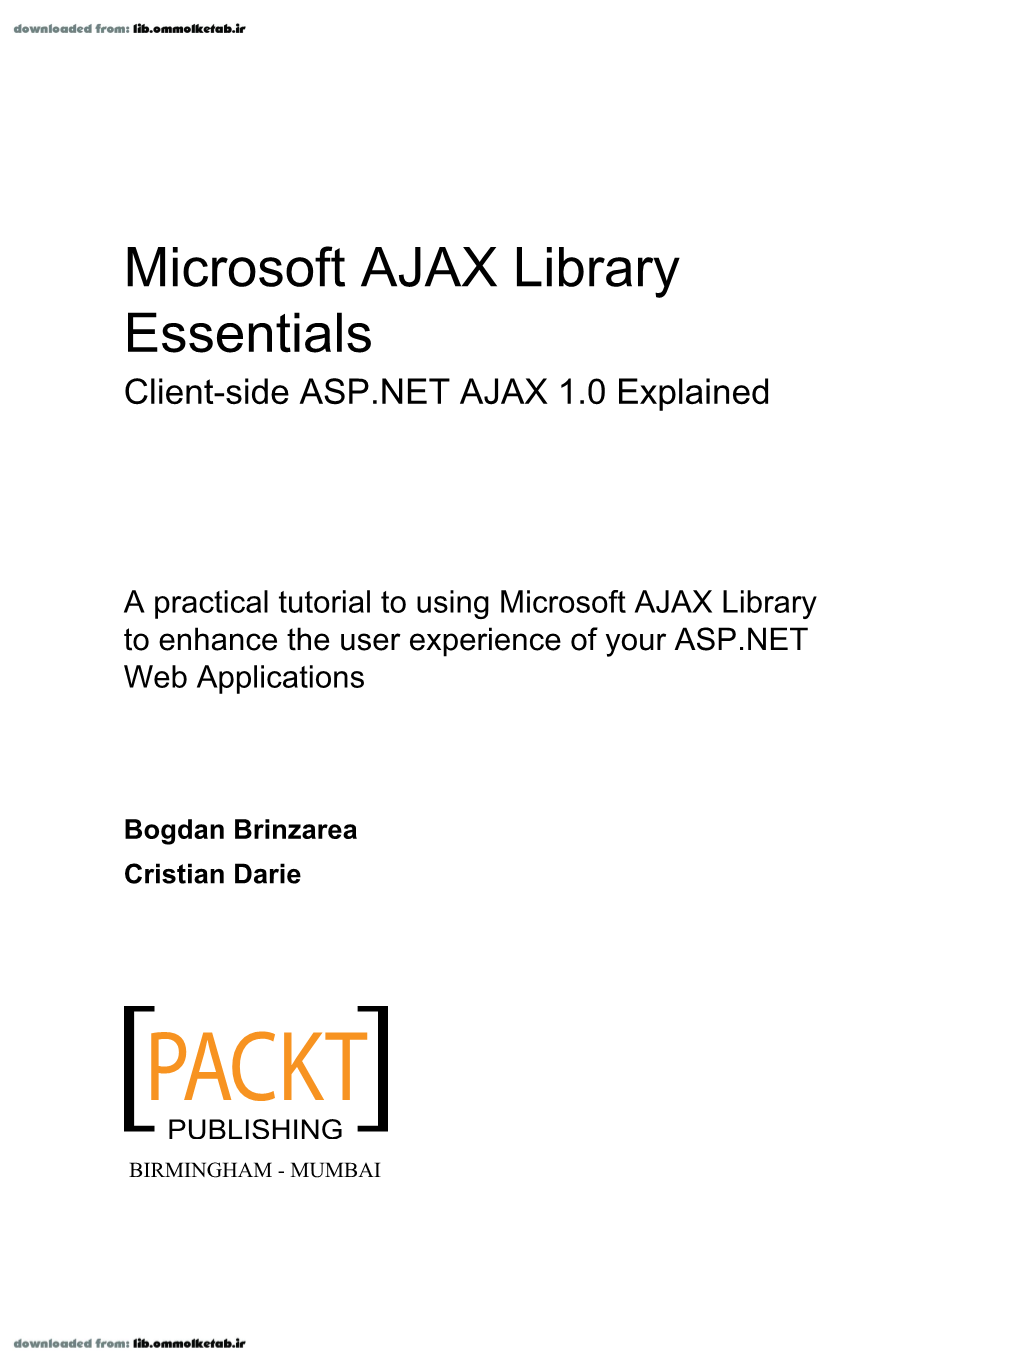 Microsoft AJAX Library Essentials Client-Side ASP.NET AJAX 1.0 Explained